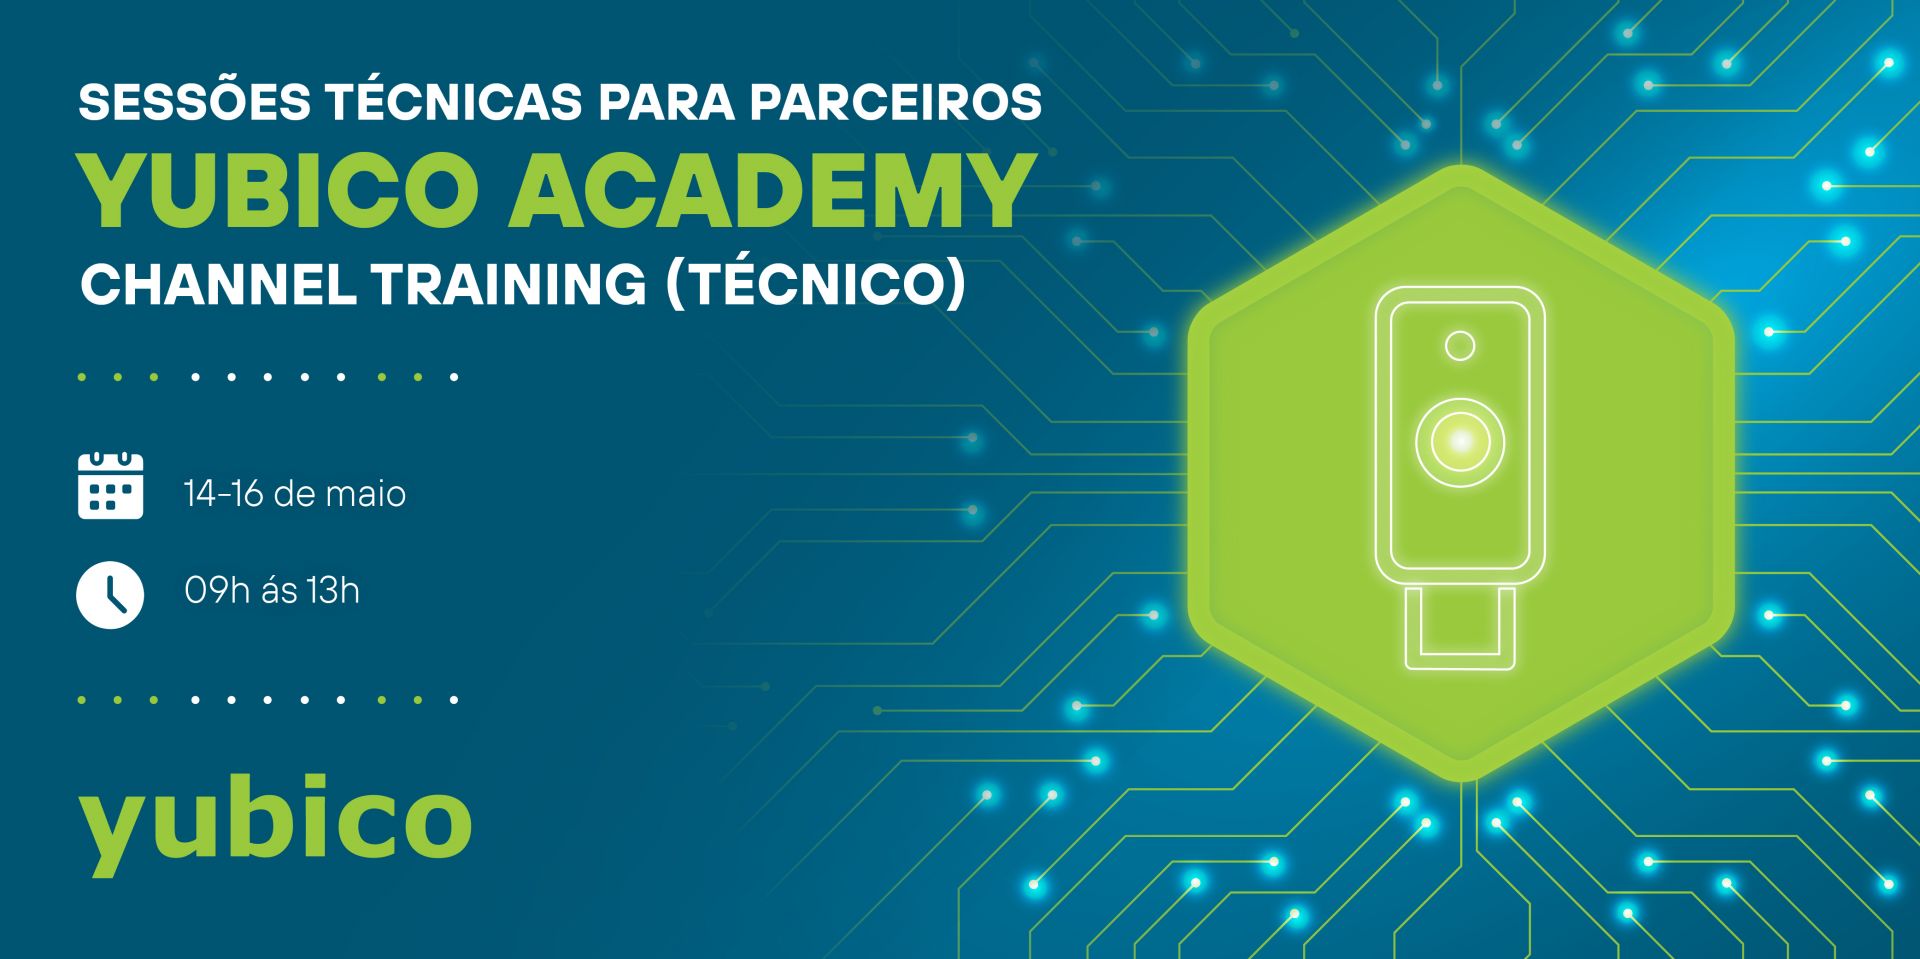 Yubico Academy - Channel Training (Técnico)